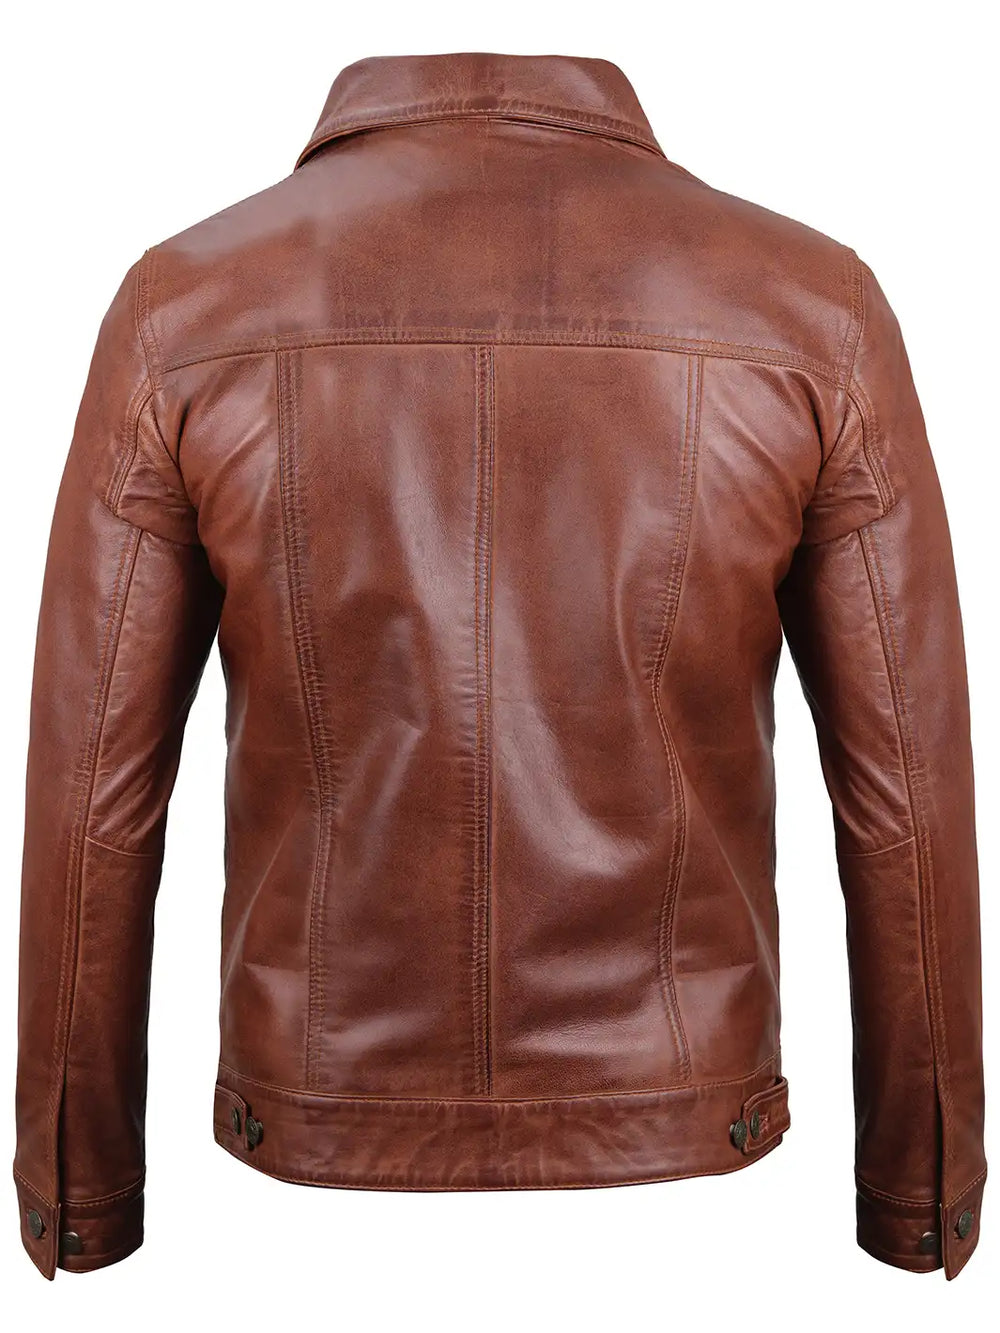 Trucker cognac leather jacket